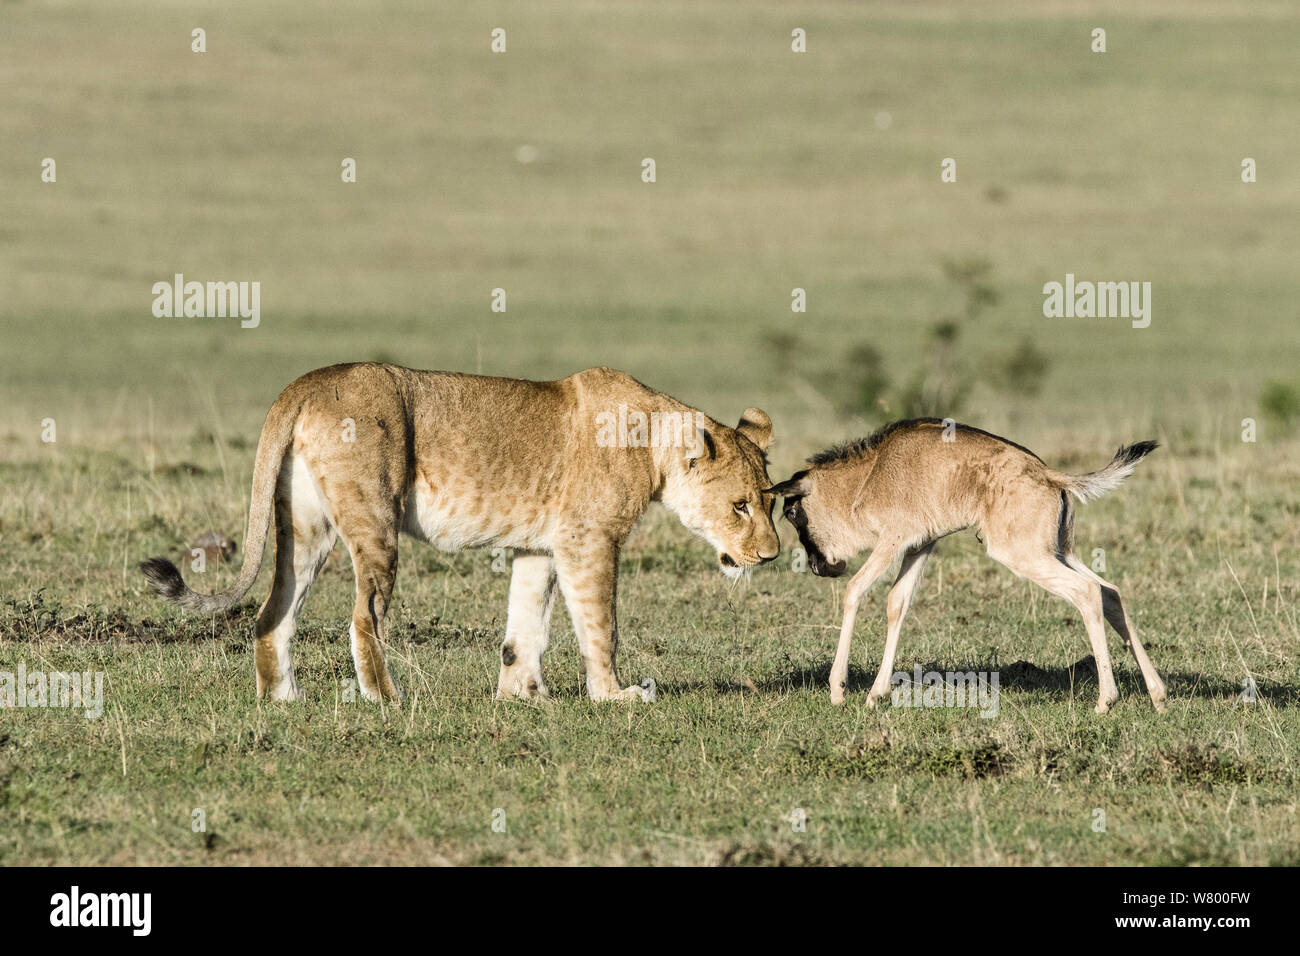 León (Panthera leo) jugando con bebes perdidos (Ñus Connochaetes taurinus), Masai-Mara Game Reserve, Kenya. Foto de stock